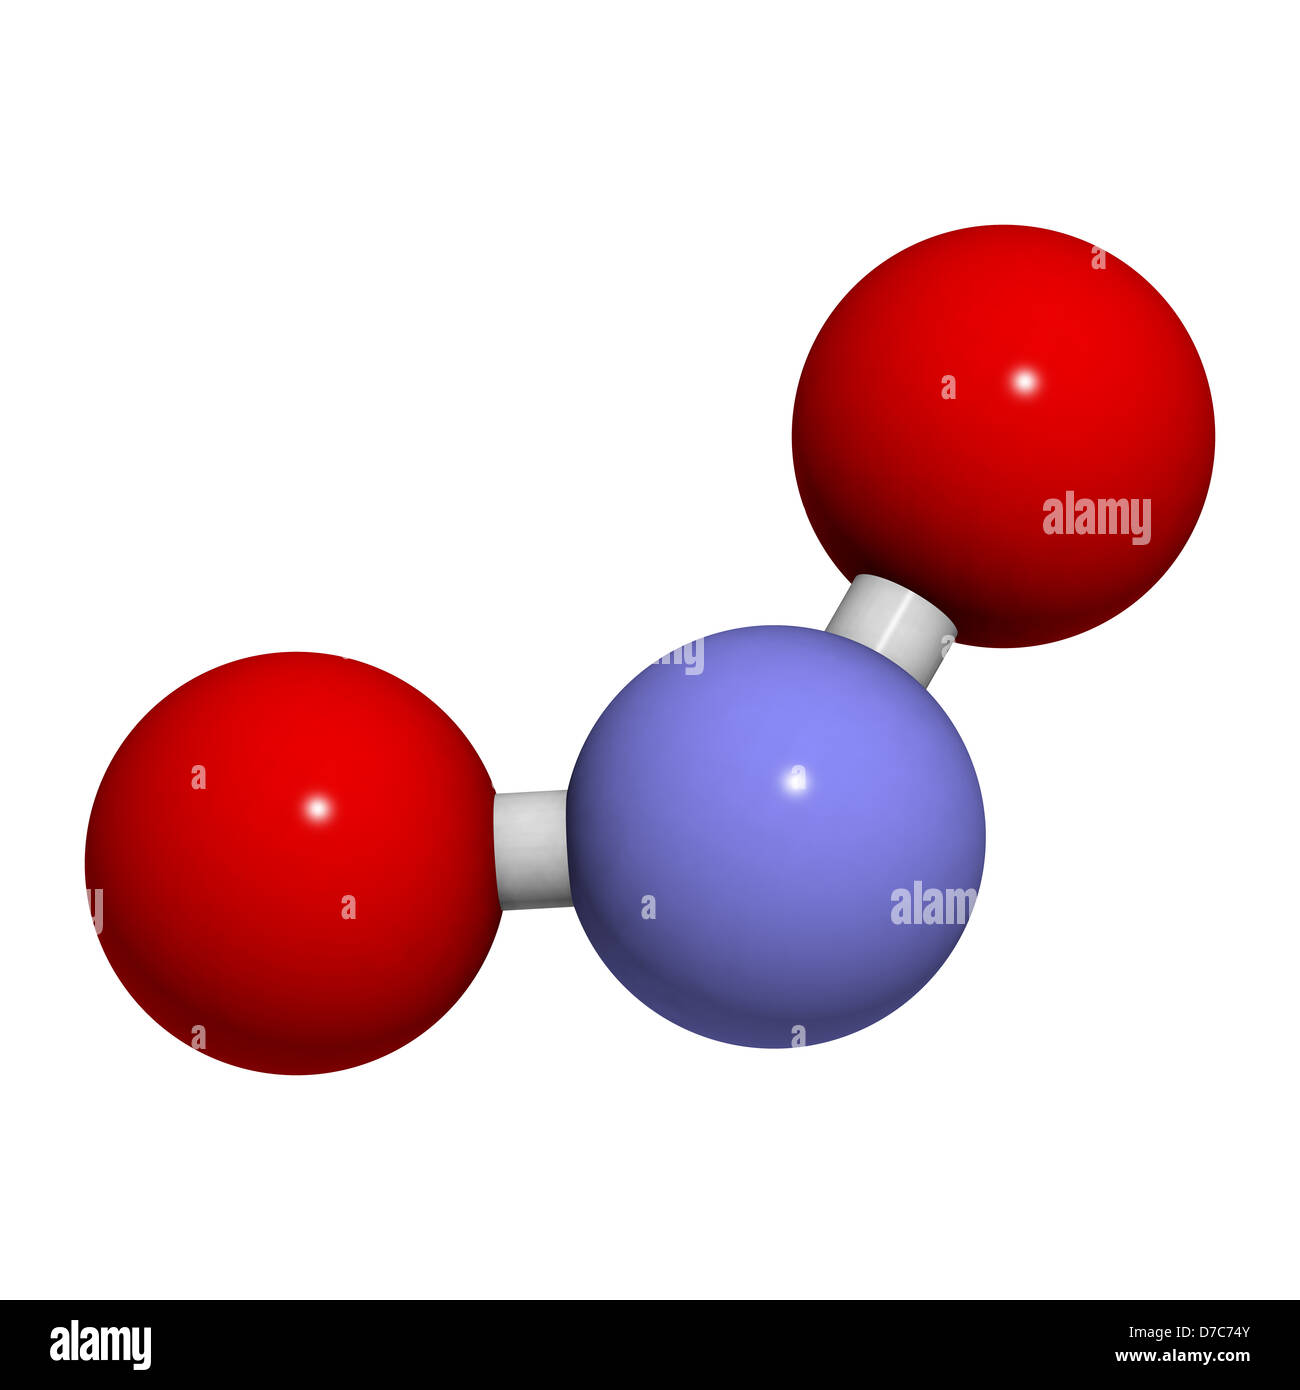 Stickstoffdioxid (NO2, NOx) giftige Gas und Luft Schadstoff, Molekülmodell Stockfoto